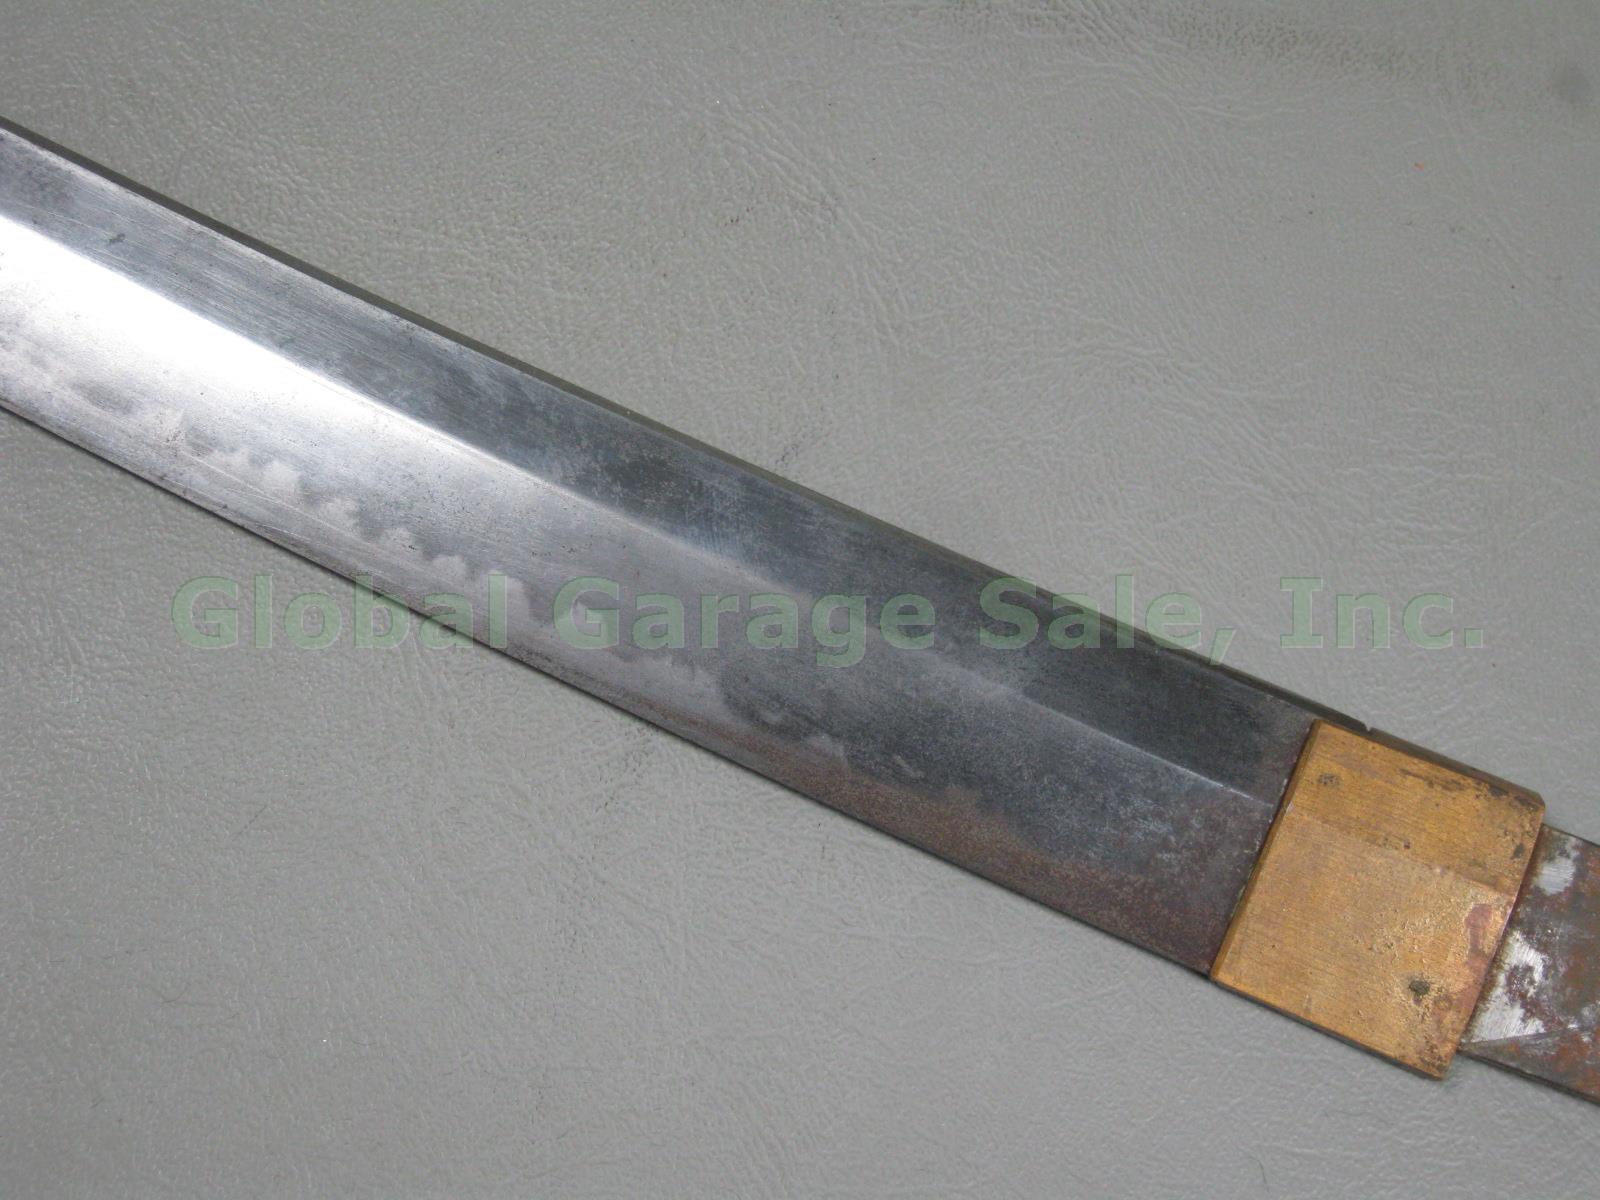 Vtg Antique Signed Nagamura Kiyonobu WWII Gendaito Katana Samurai Sword NO RES! 16